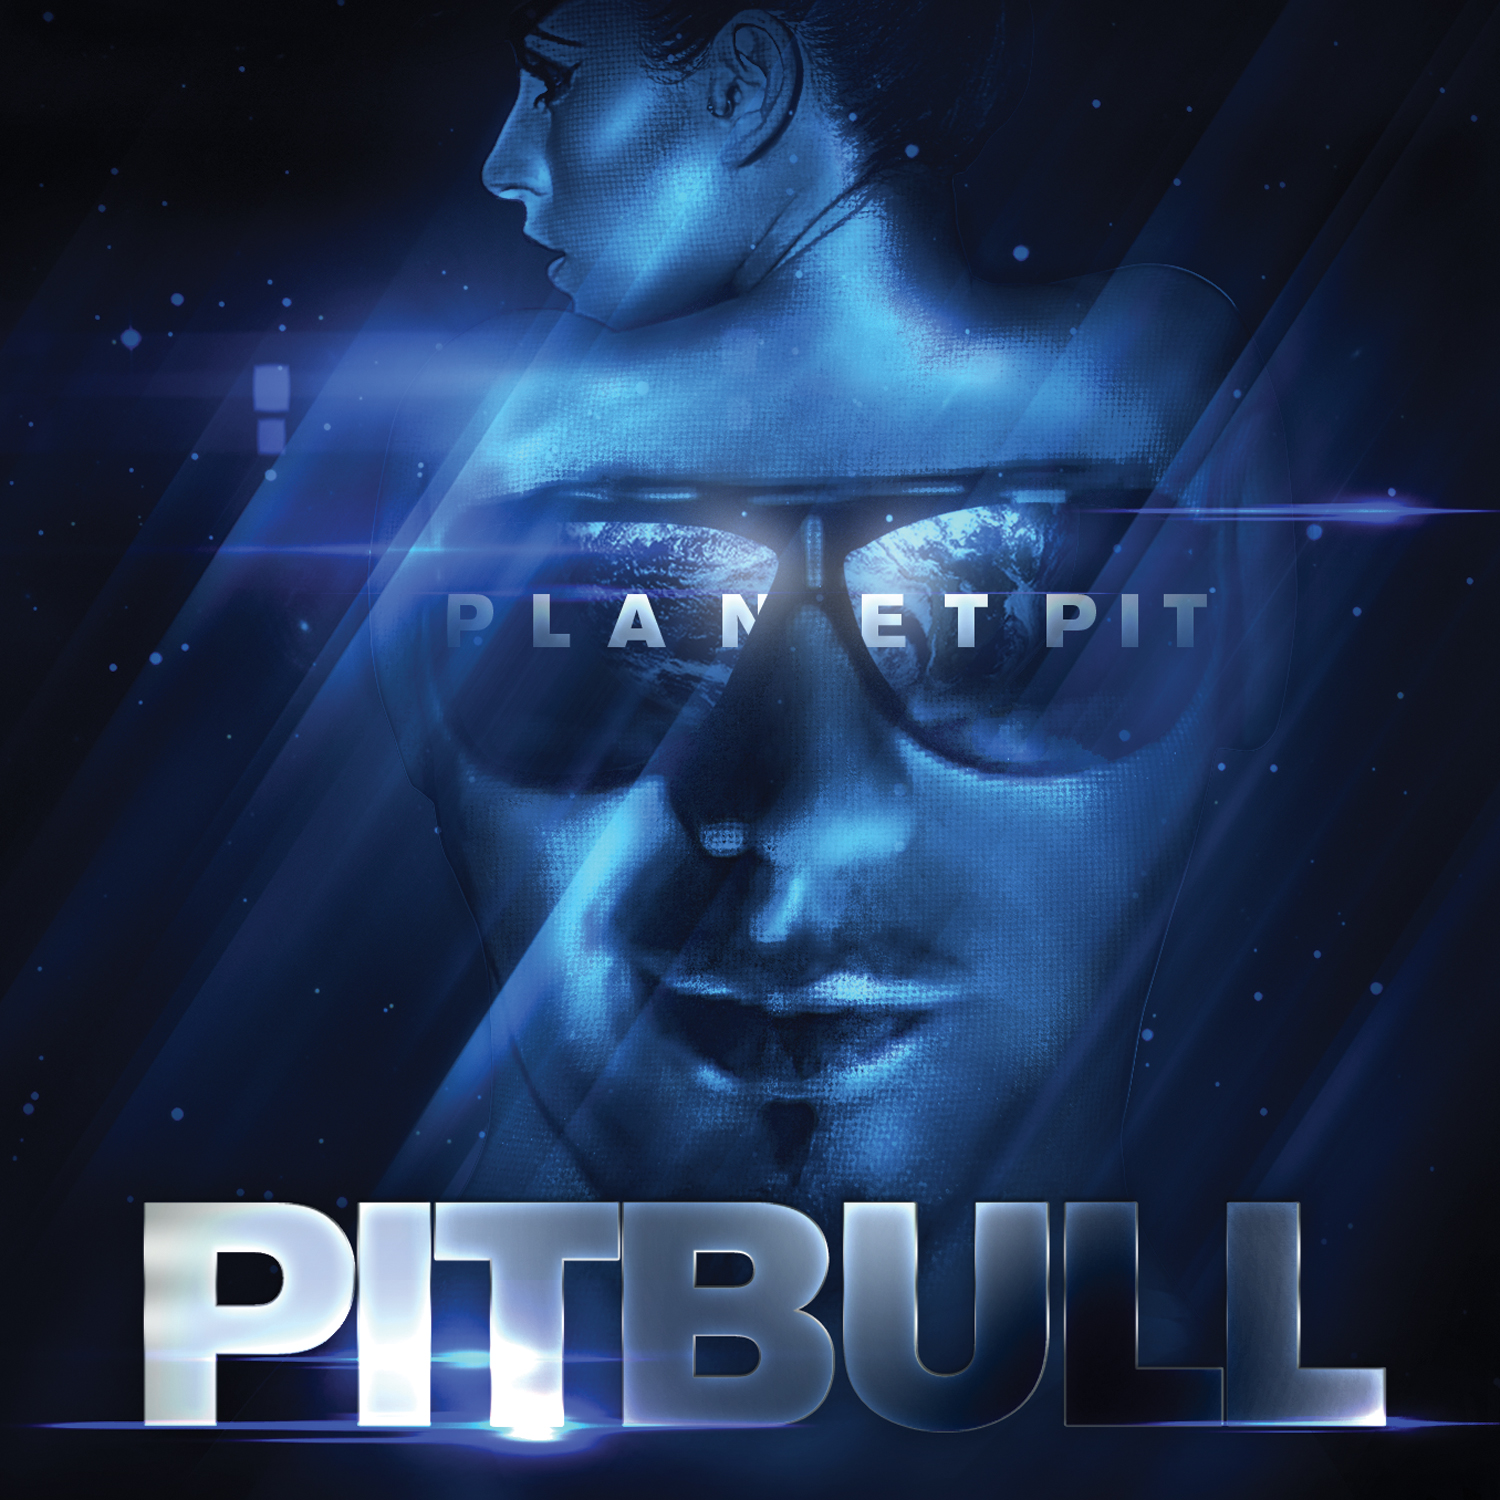 Pitbull-Planet-Pit-Cover